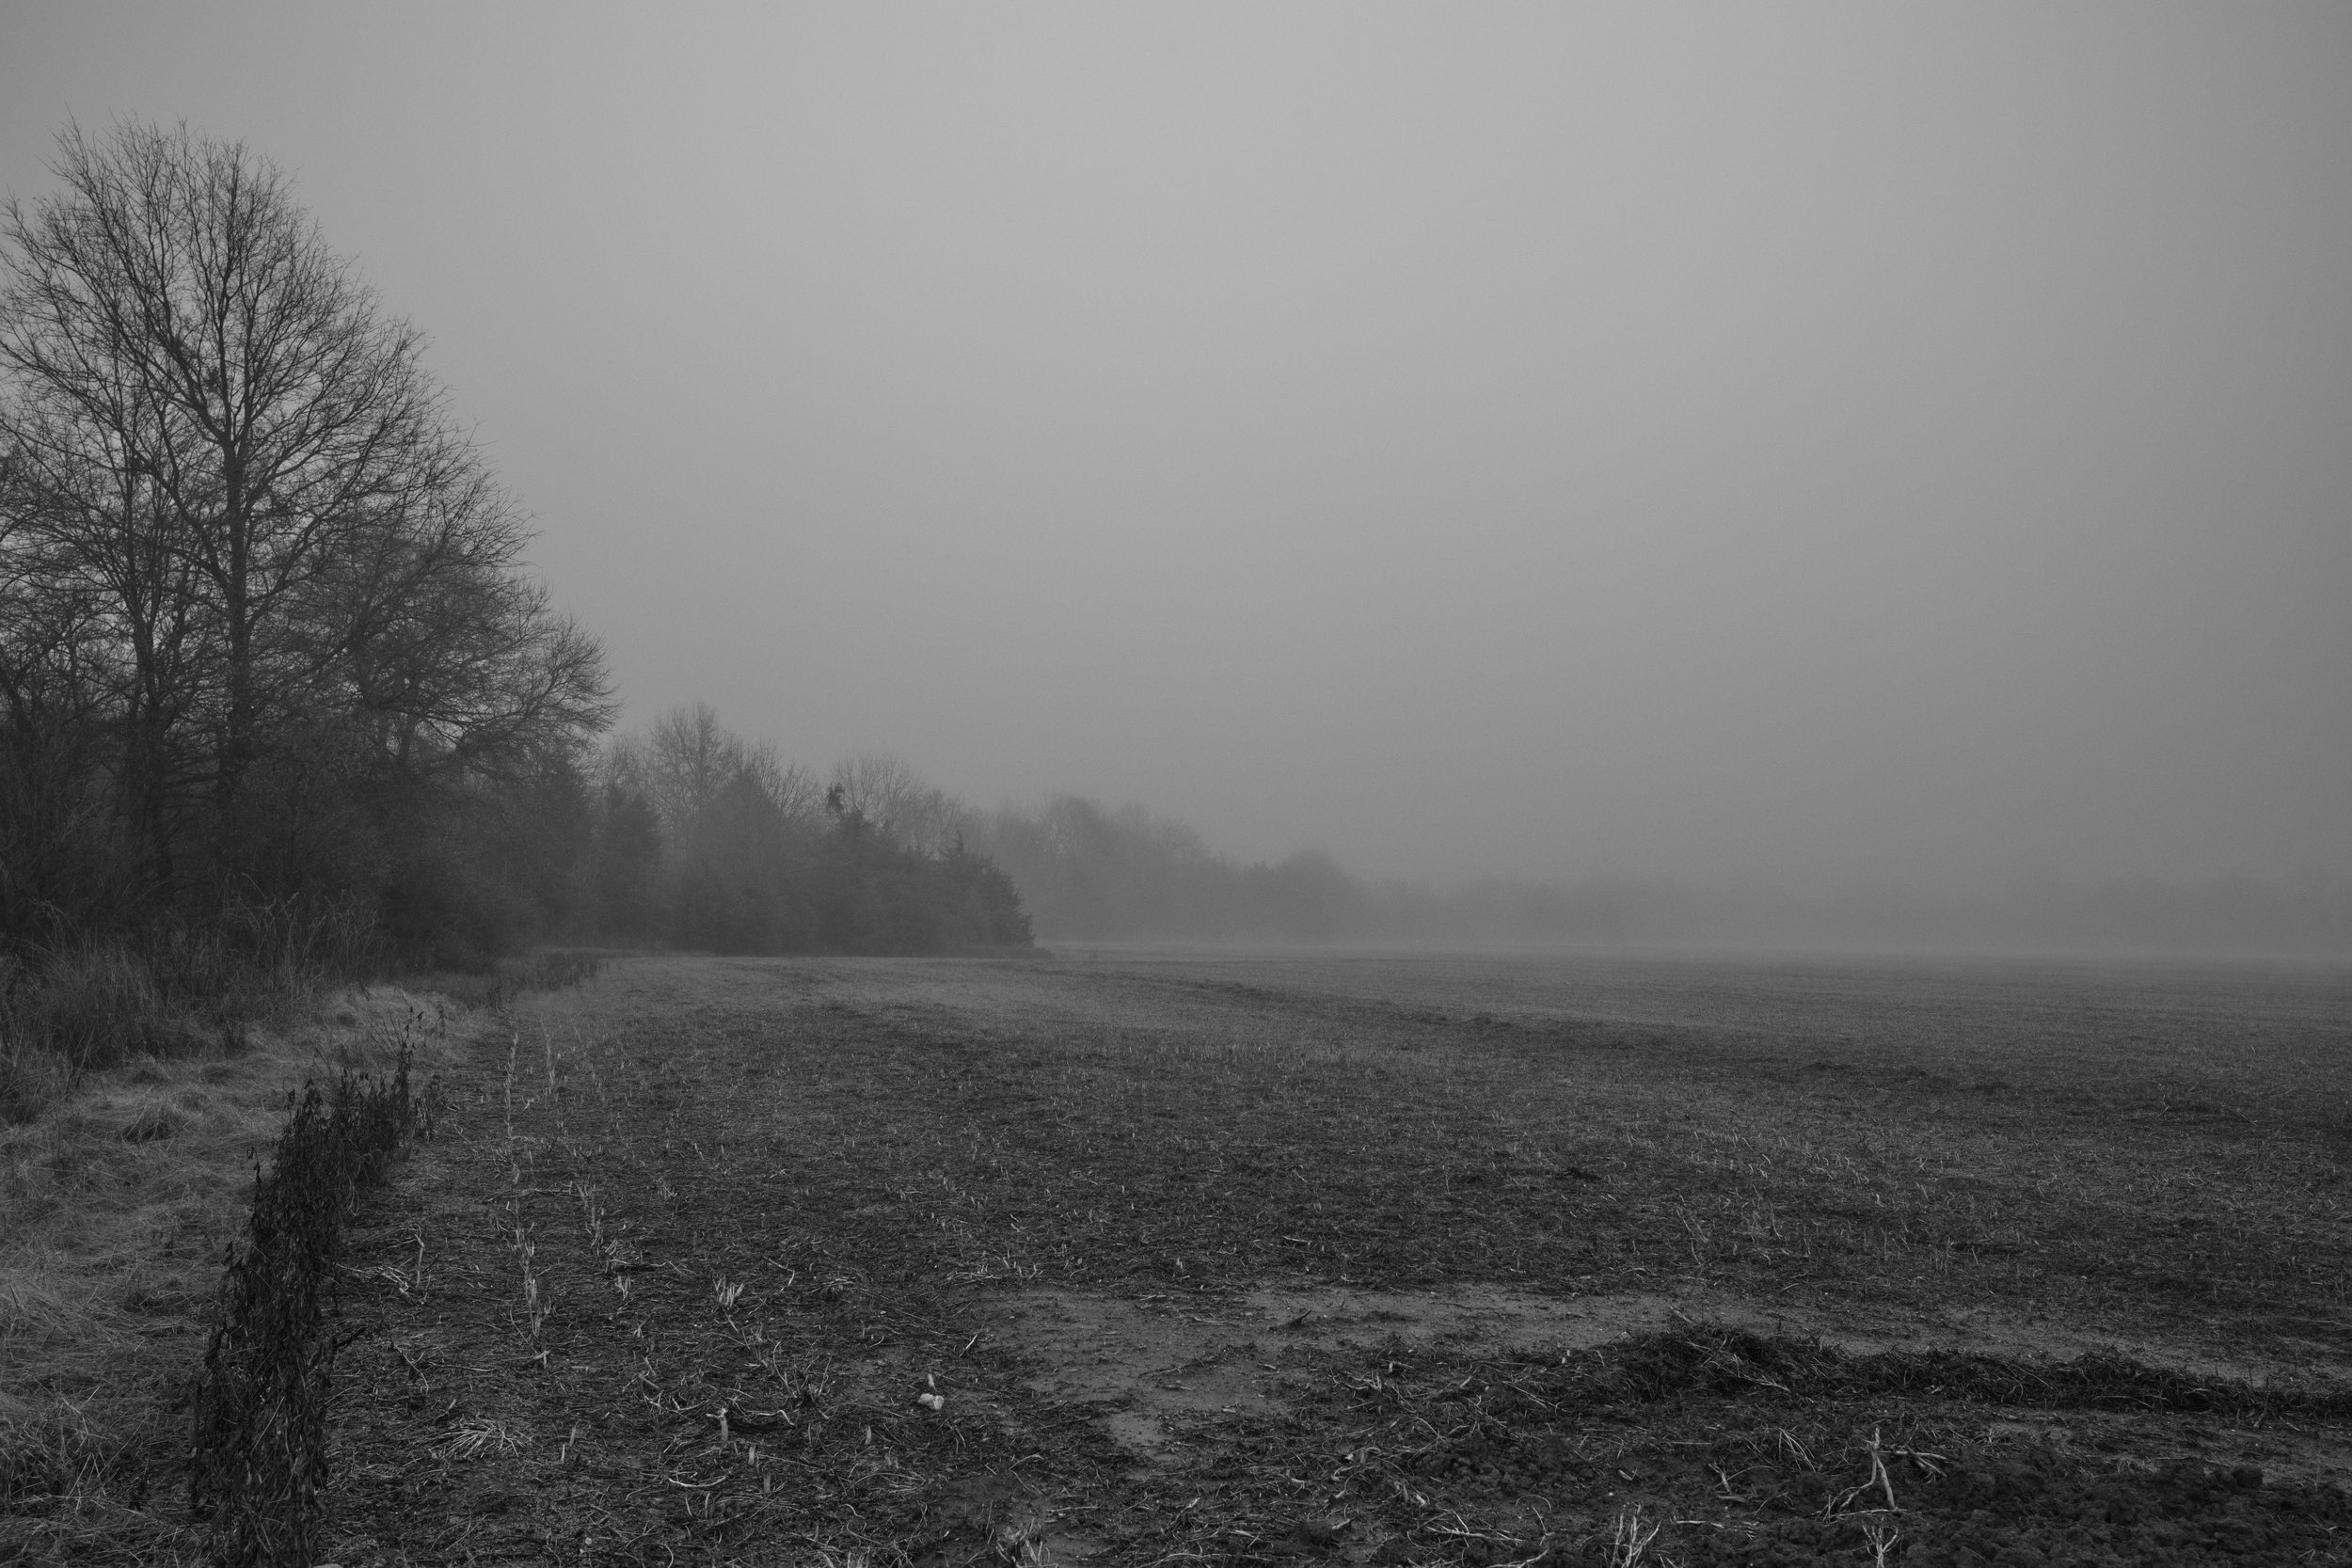 Edge of the Field in Fog